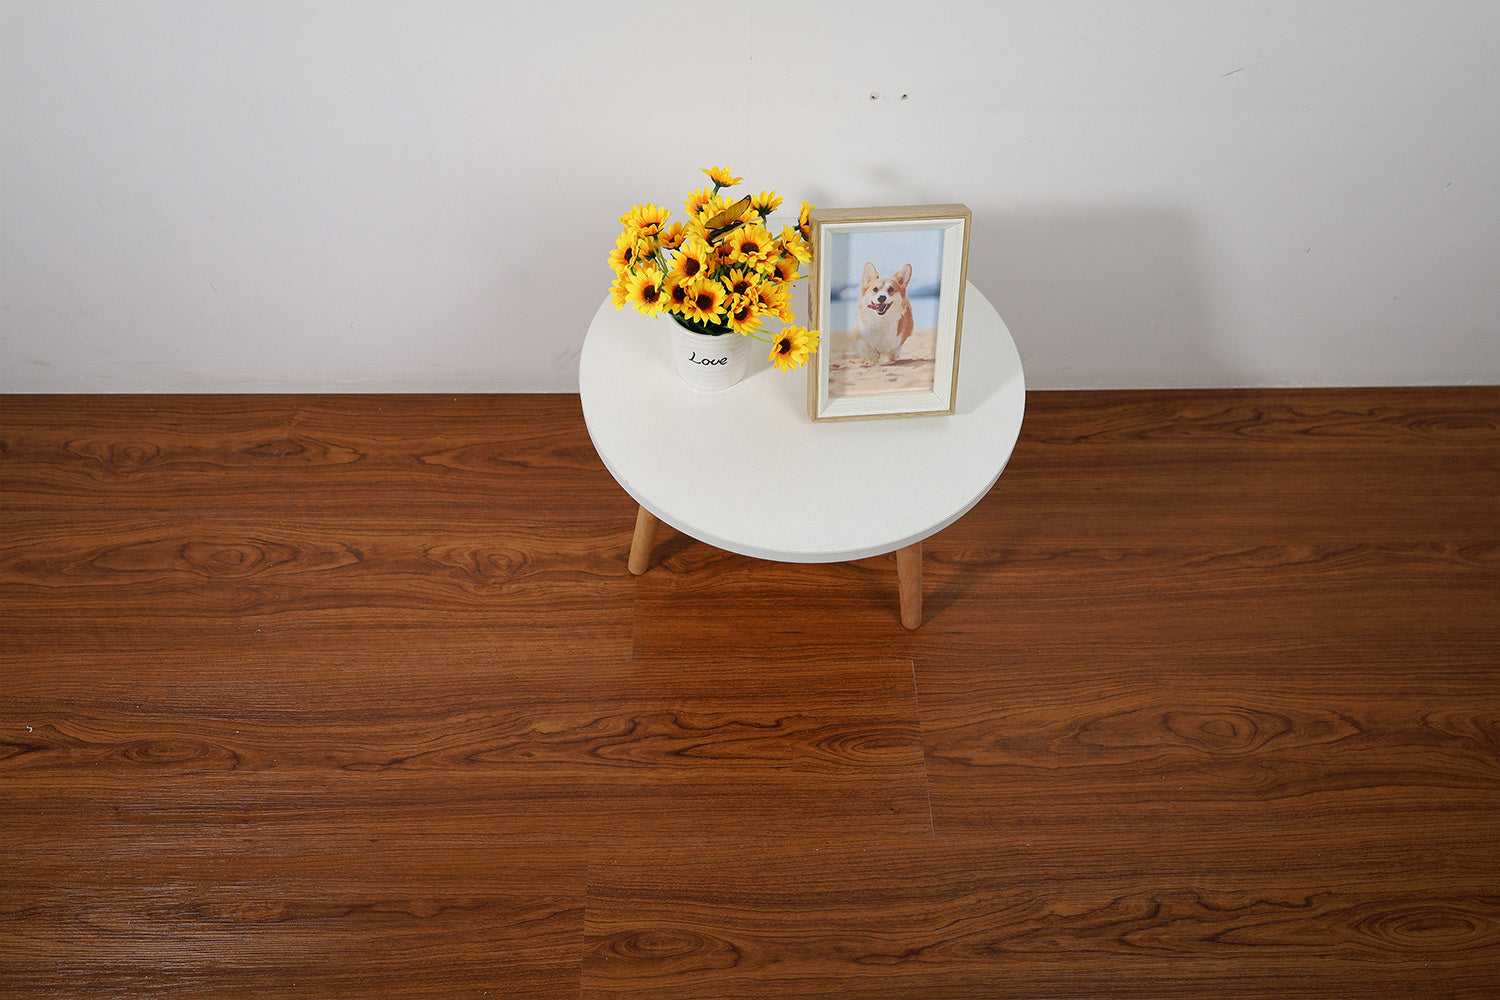 SPC Flooring SPC 6mm厚 石塑地板 6009 木紋 石紋 快裝地板 防水 Waterproof 耐用 Durable 簡易安裝